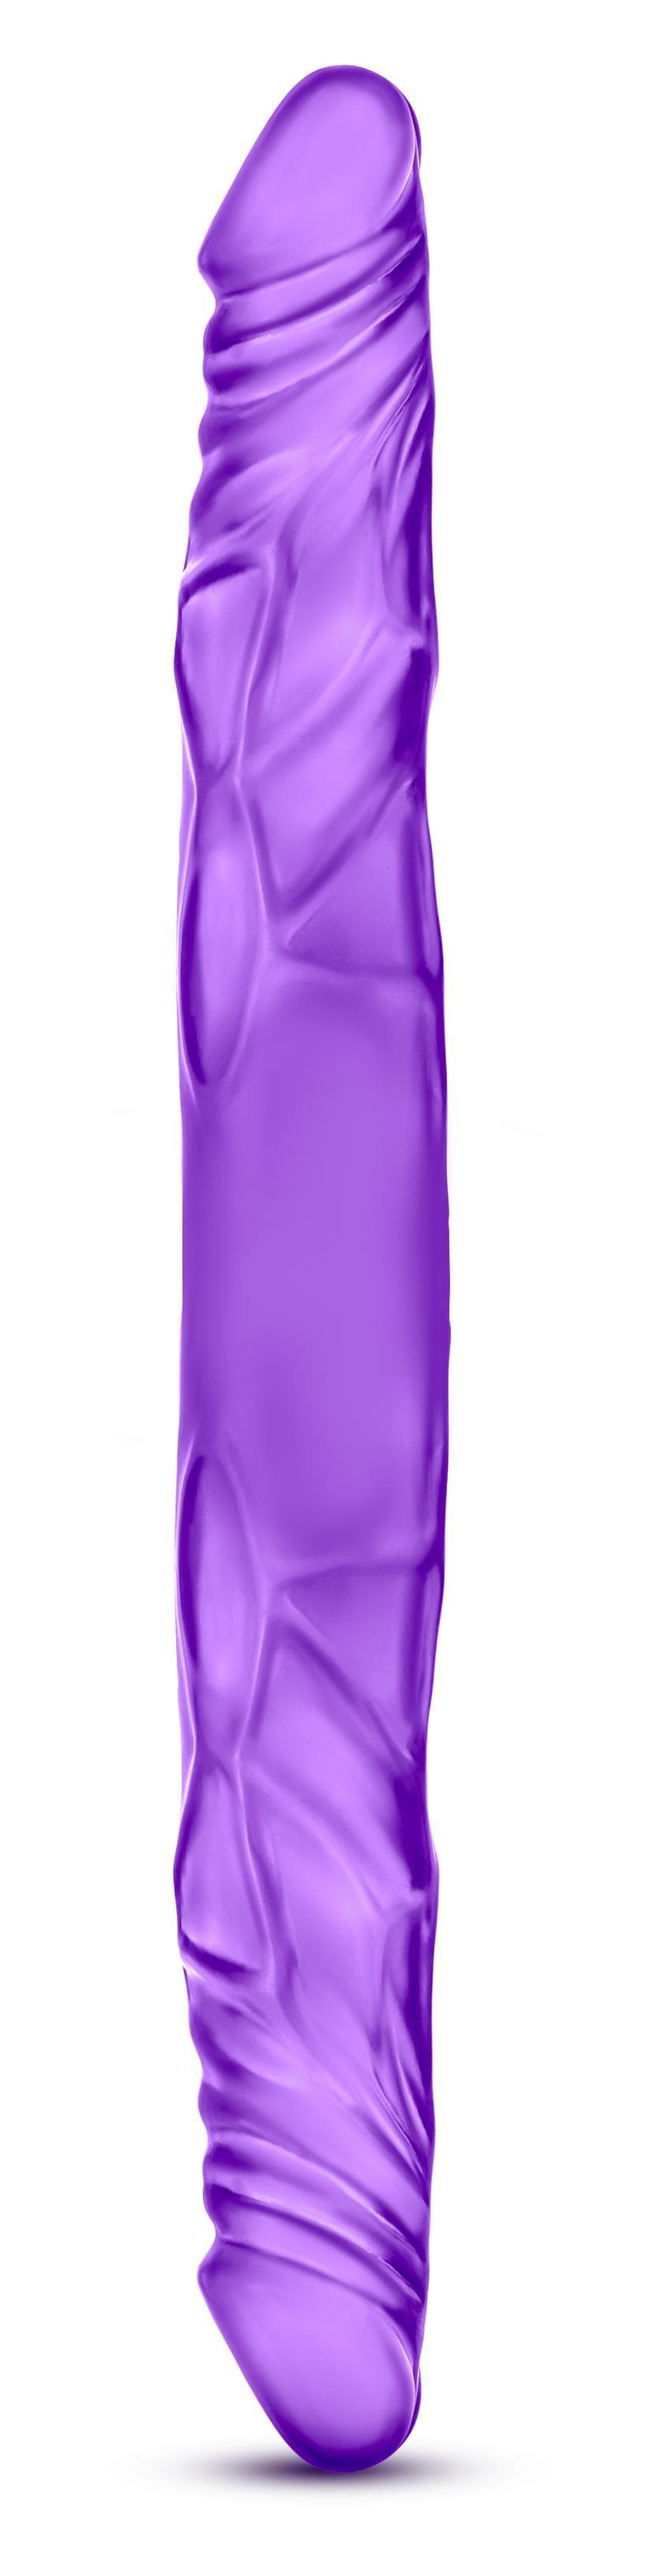 Blush Novelties   b yours 14 double dildo purple